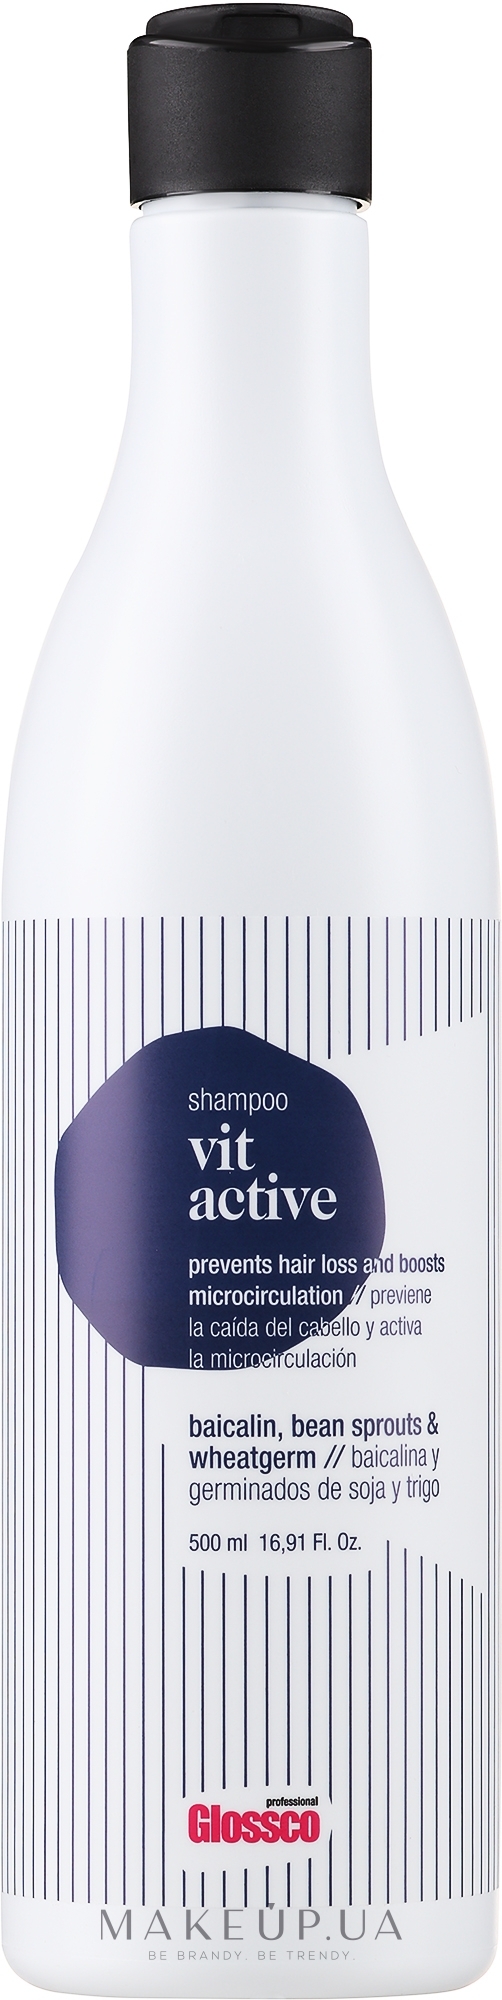 Шампунь против выпадения волос - Glossco Treatment Vit Active Shampoo  — фото 500ml